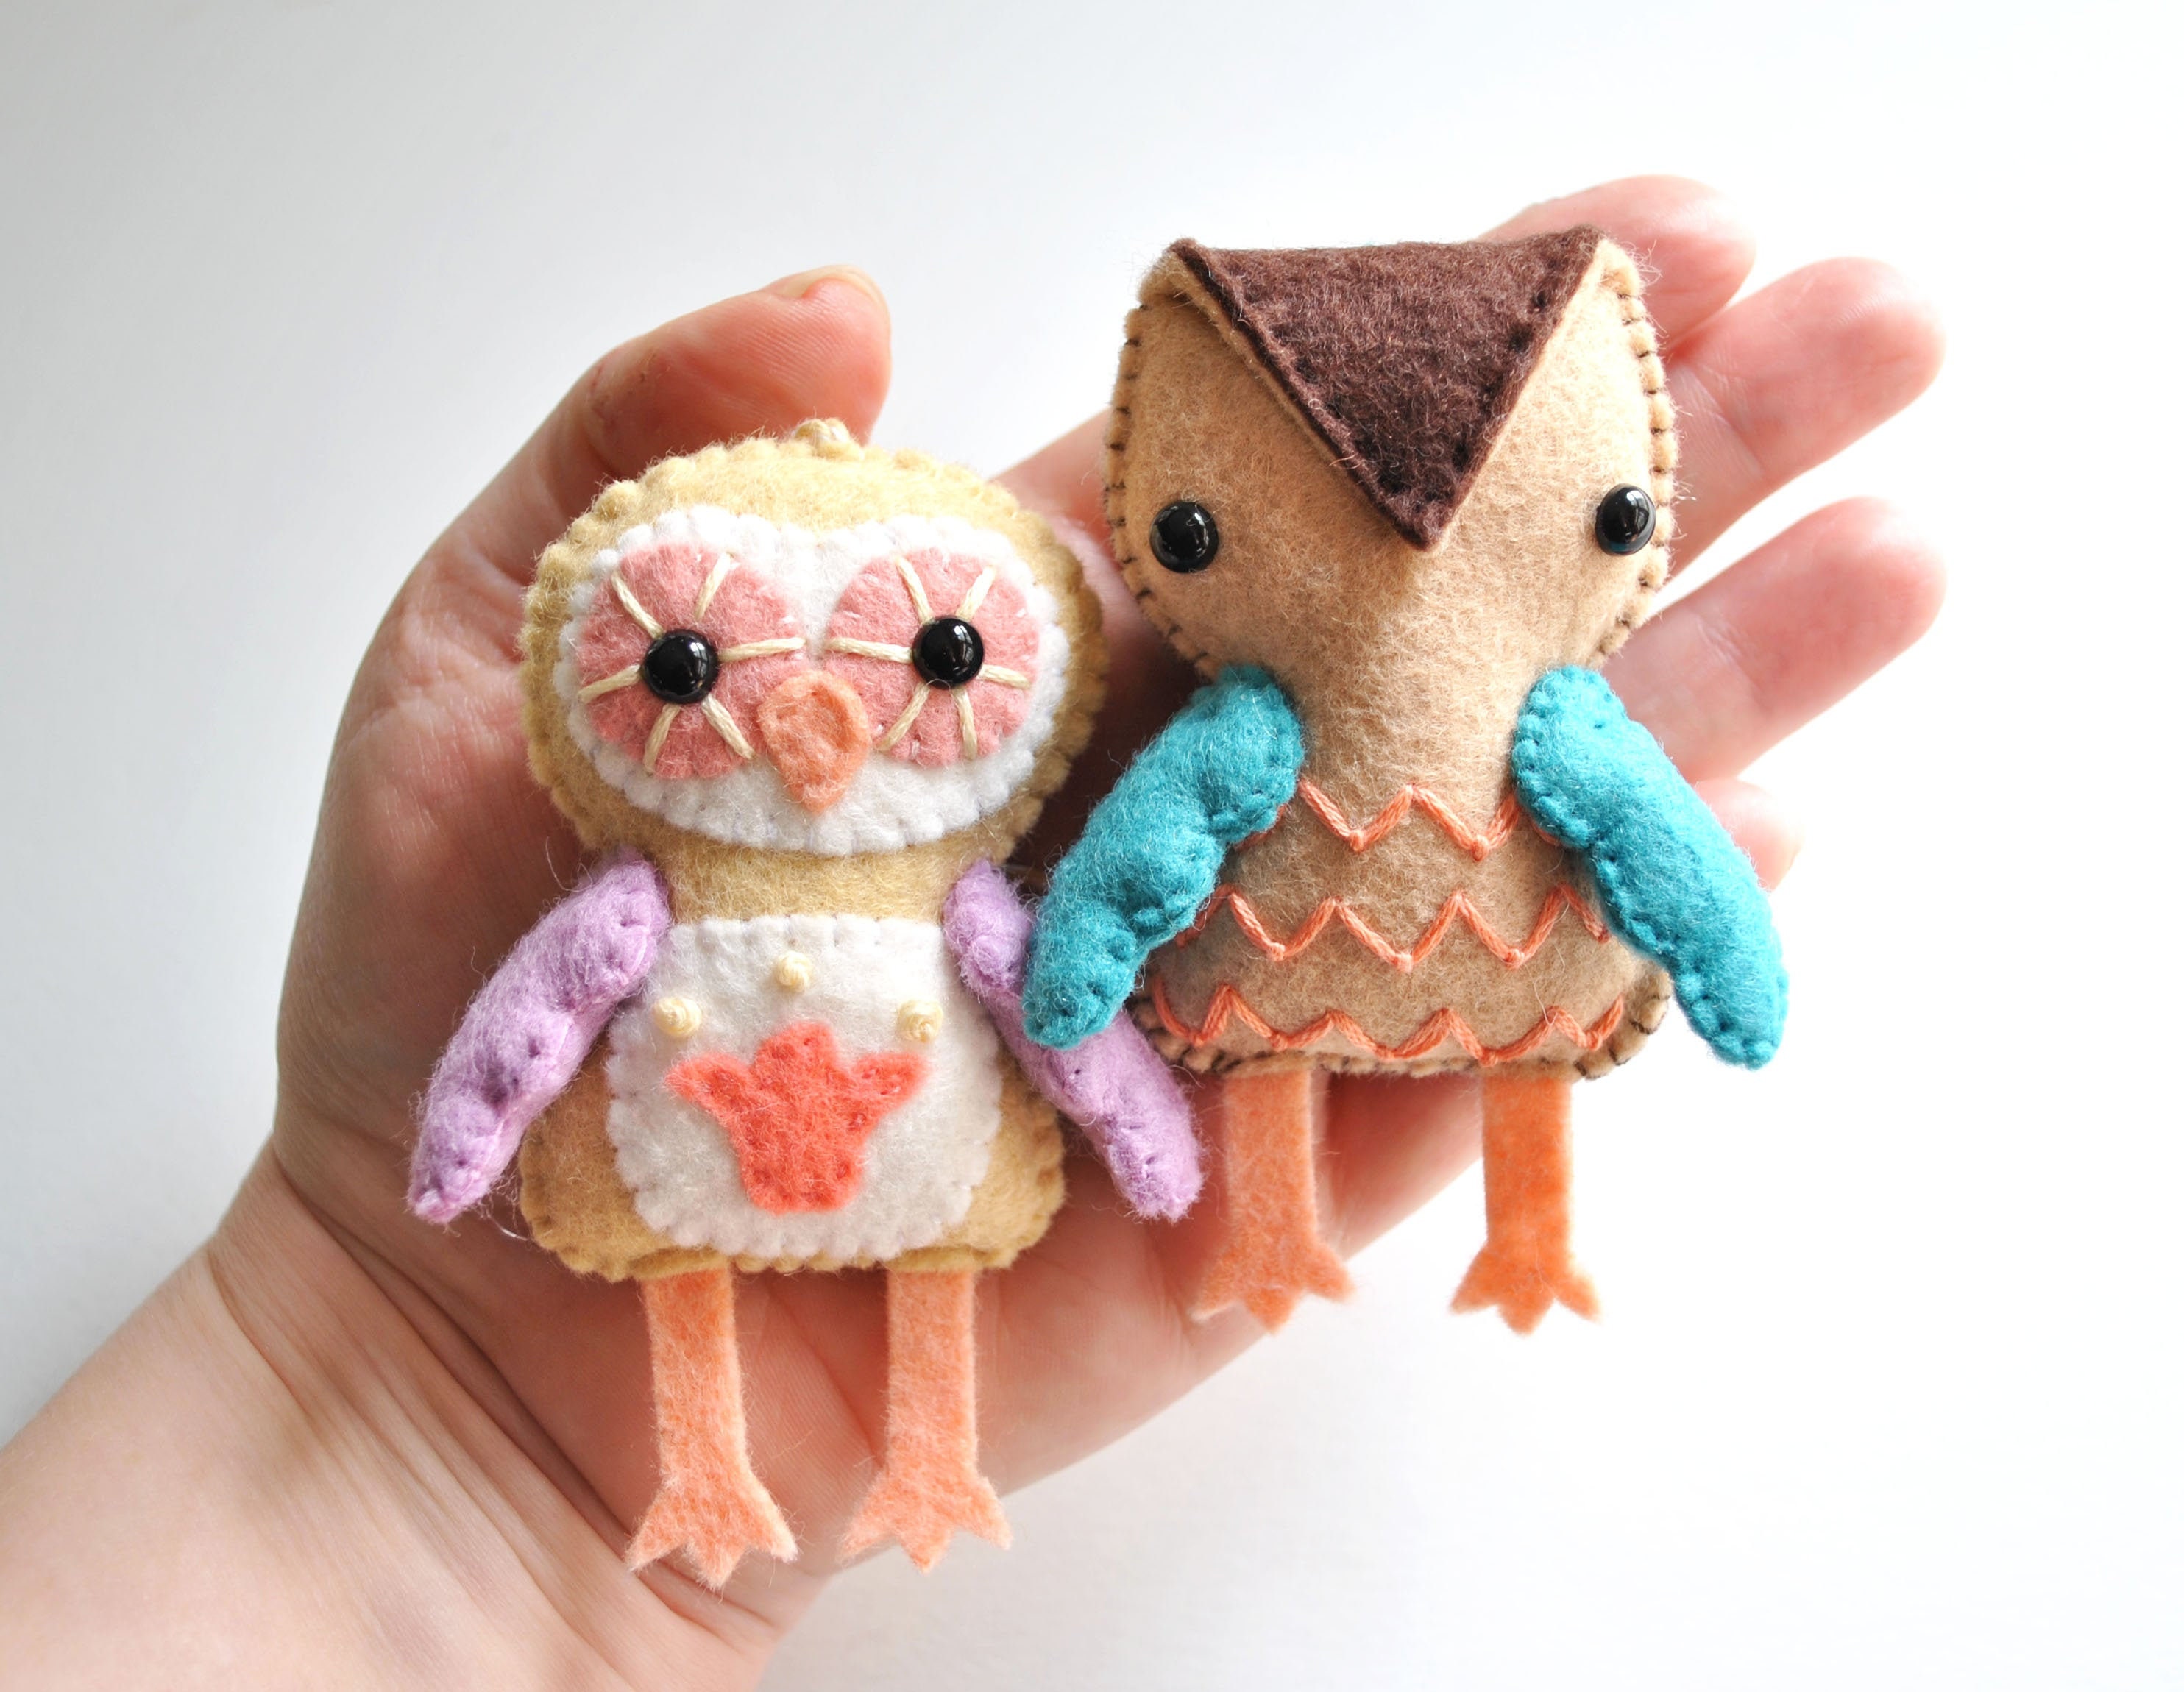 Felt Animal Patterns - Sew Your Own Stuffed Animals! - Delilah Iris Felt  Crafts